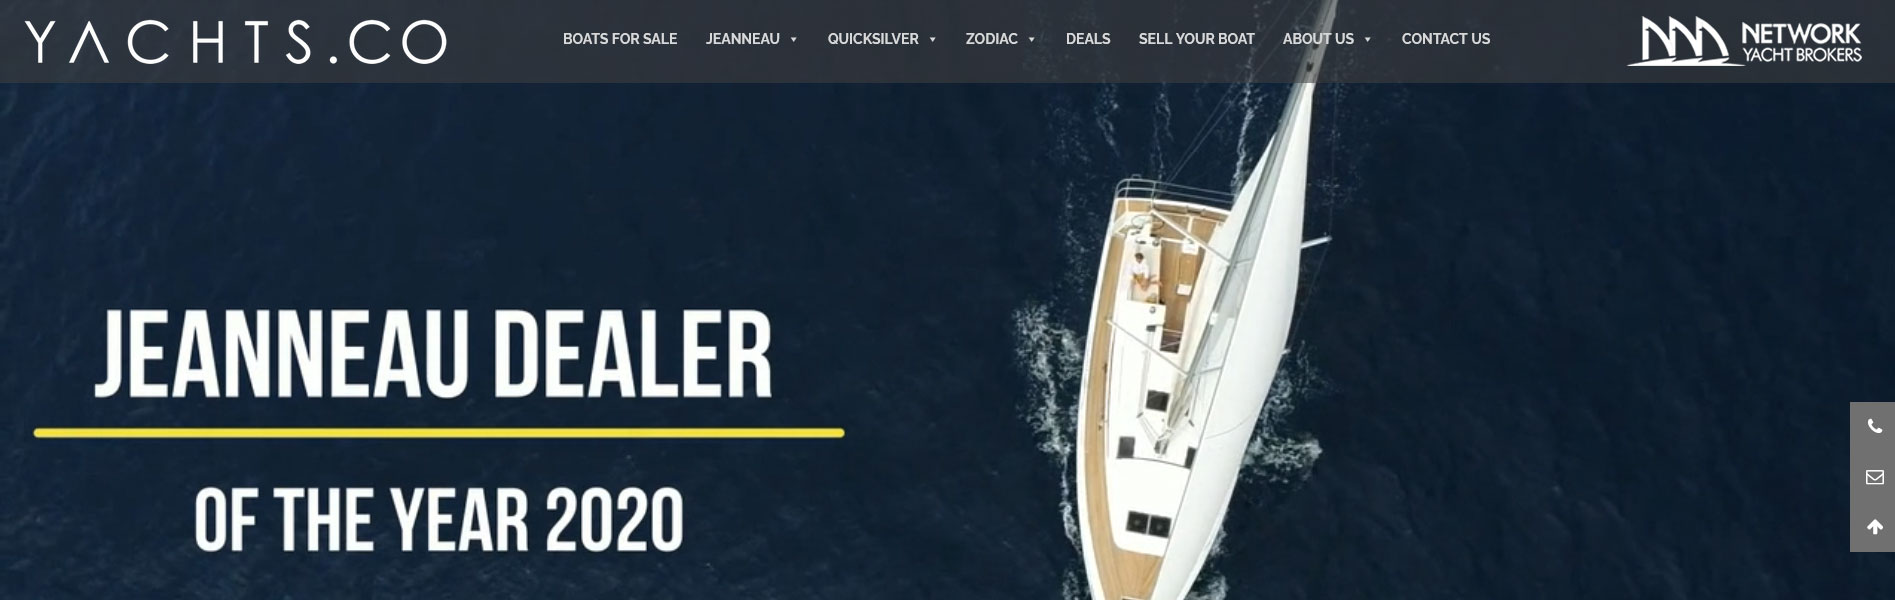 top yacht affiliate program